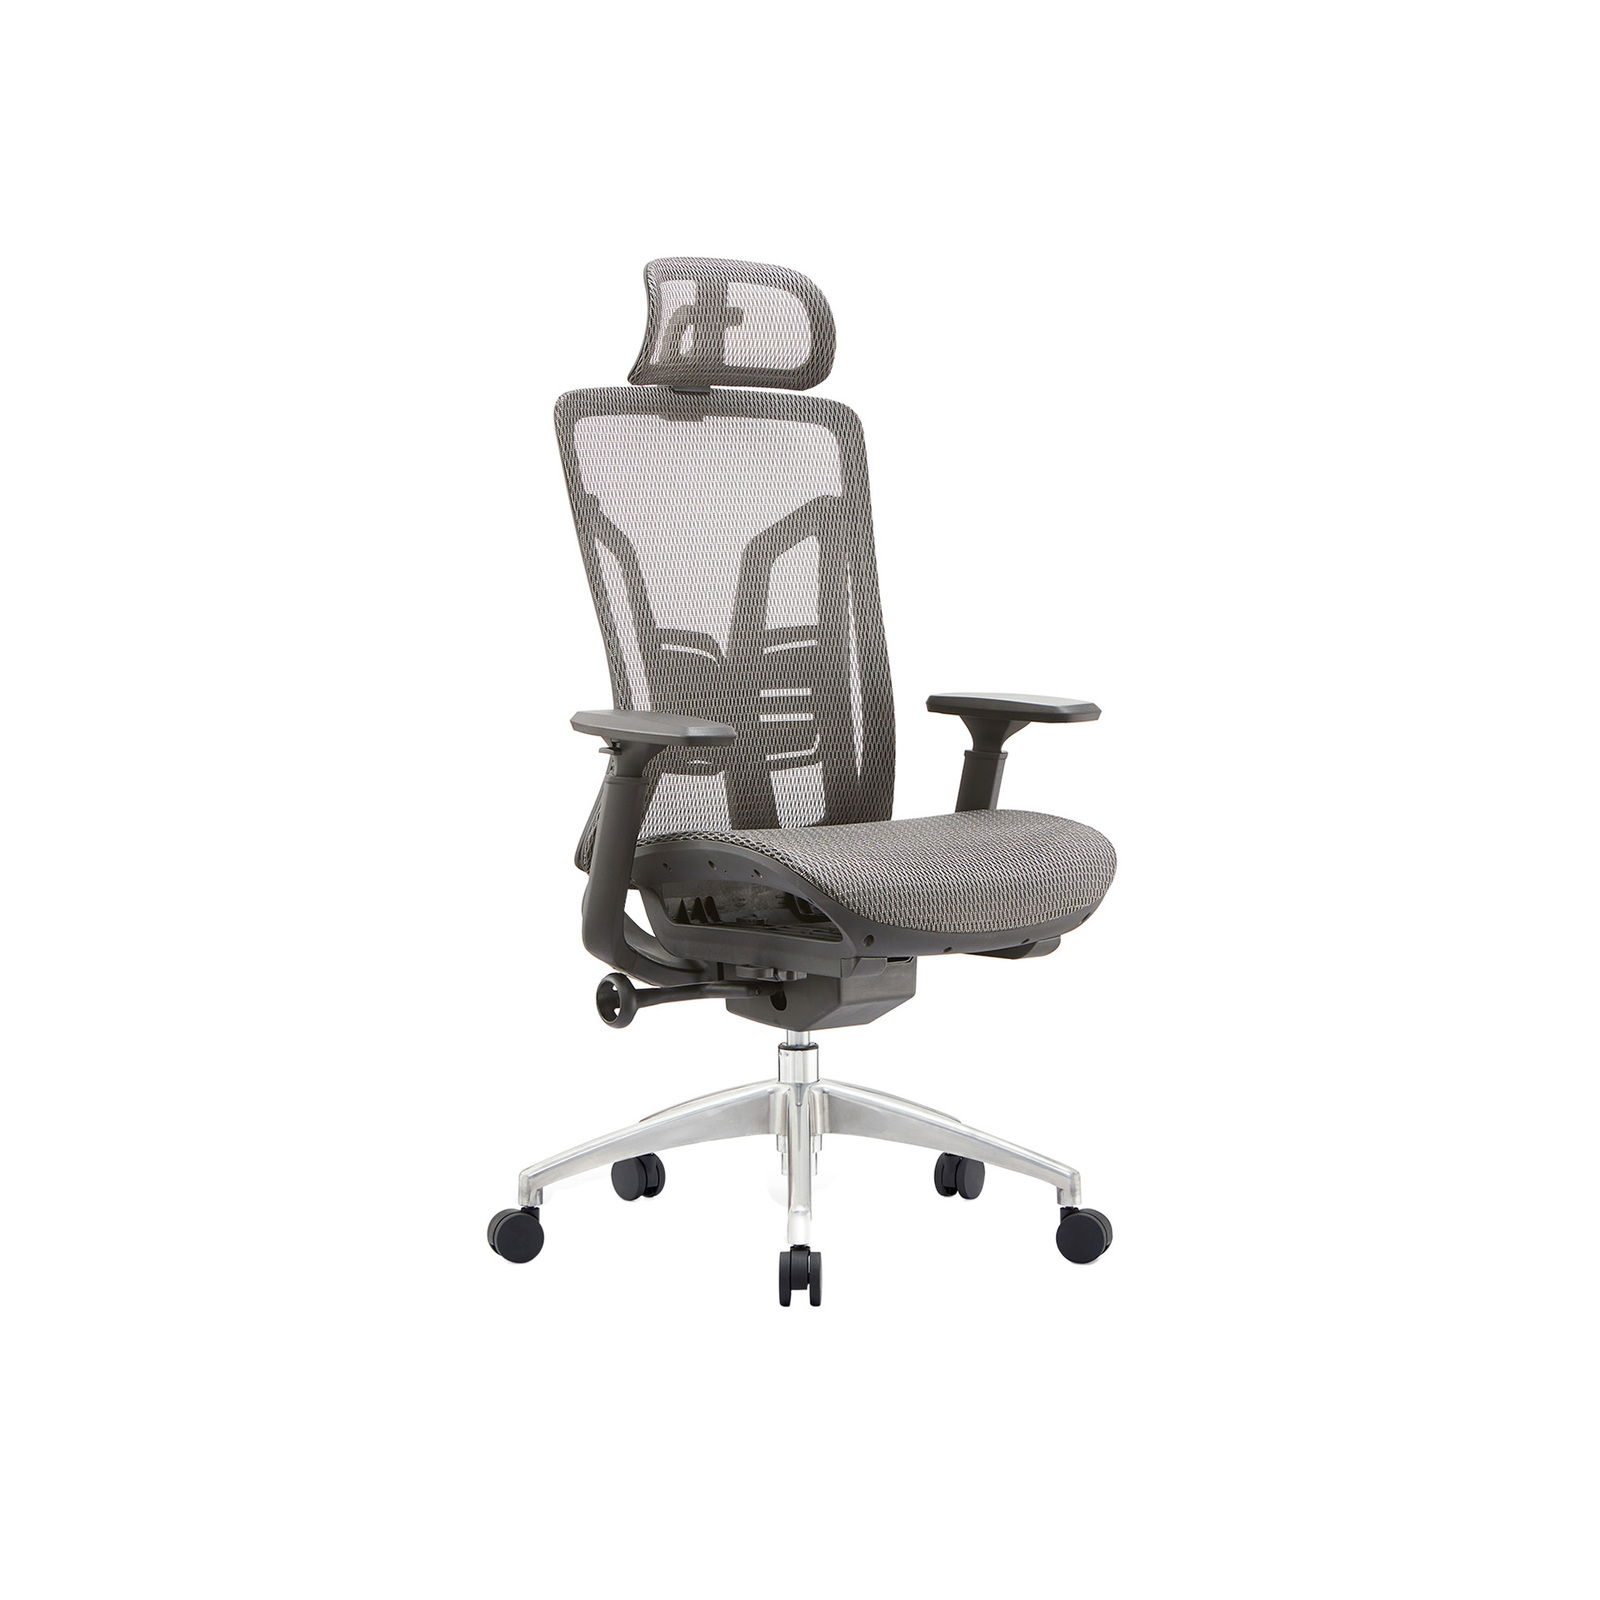 Ergonomic Mesh Work Study Computer Gaming Office Desk Chairs Executive Adjustable Recliner Seat Grey